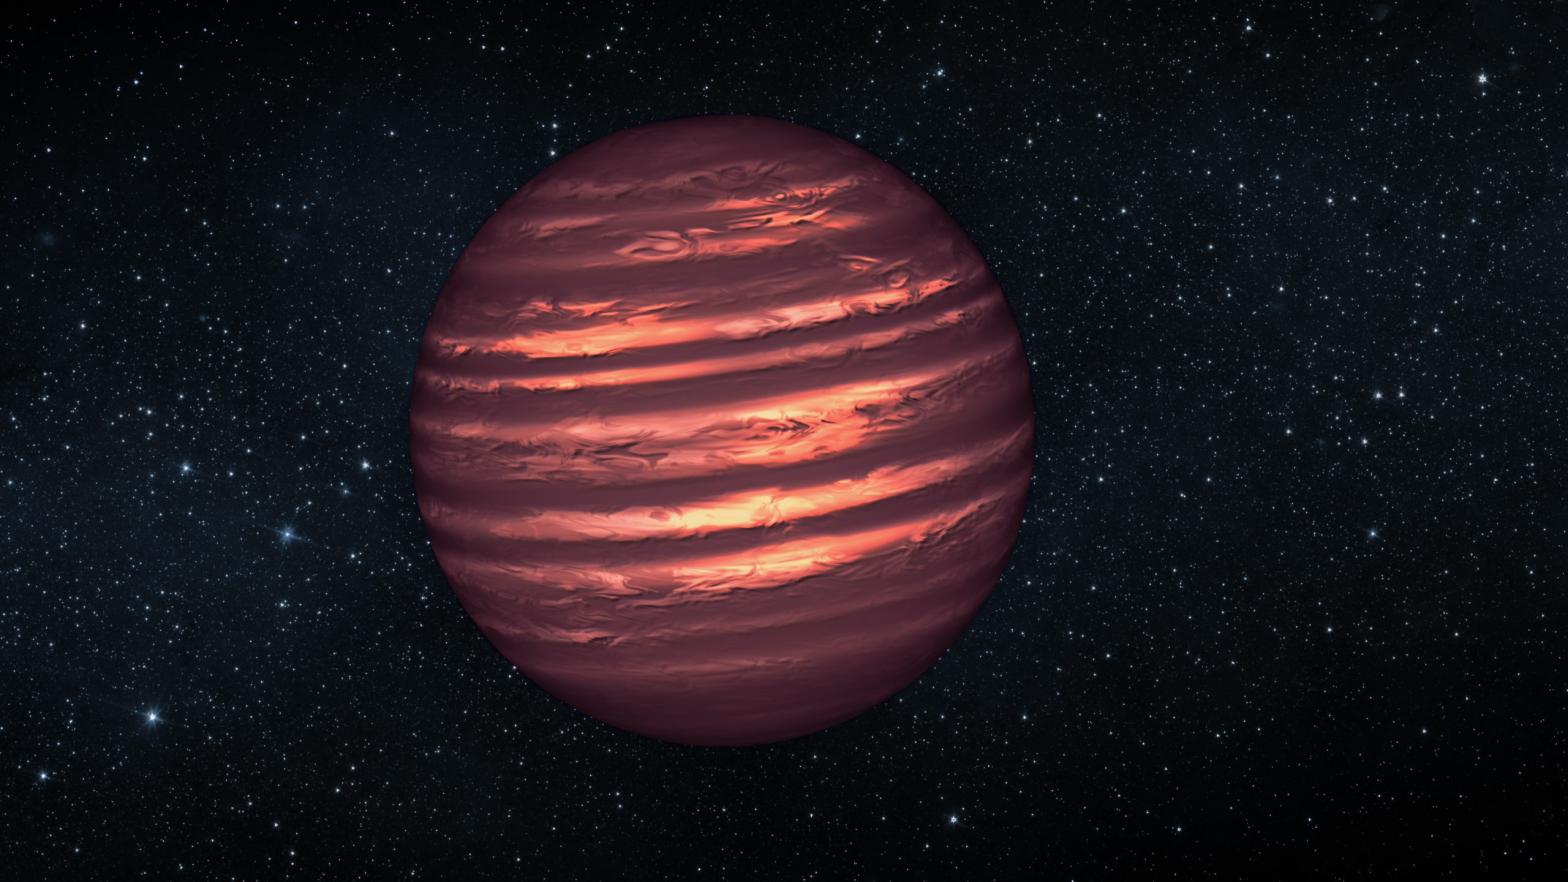 Artist's impression of a brown dwarf. (Image: NASA/JPL-Caltech)